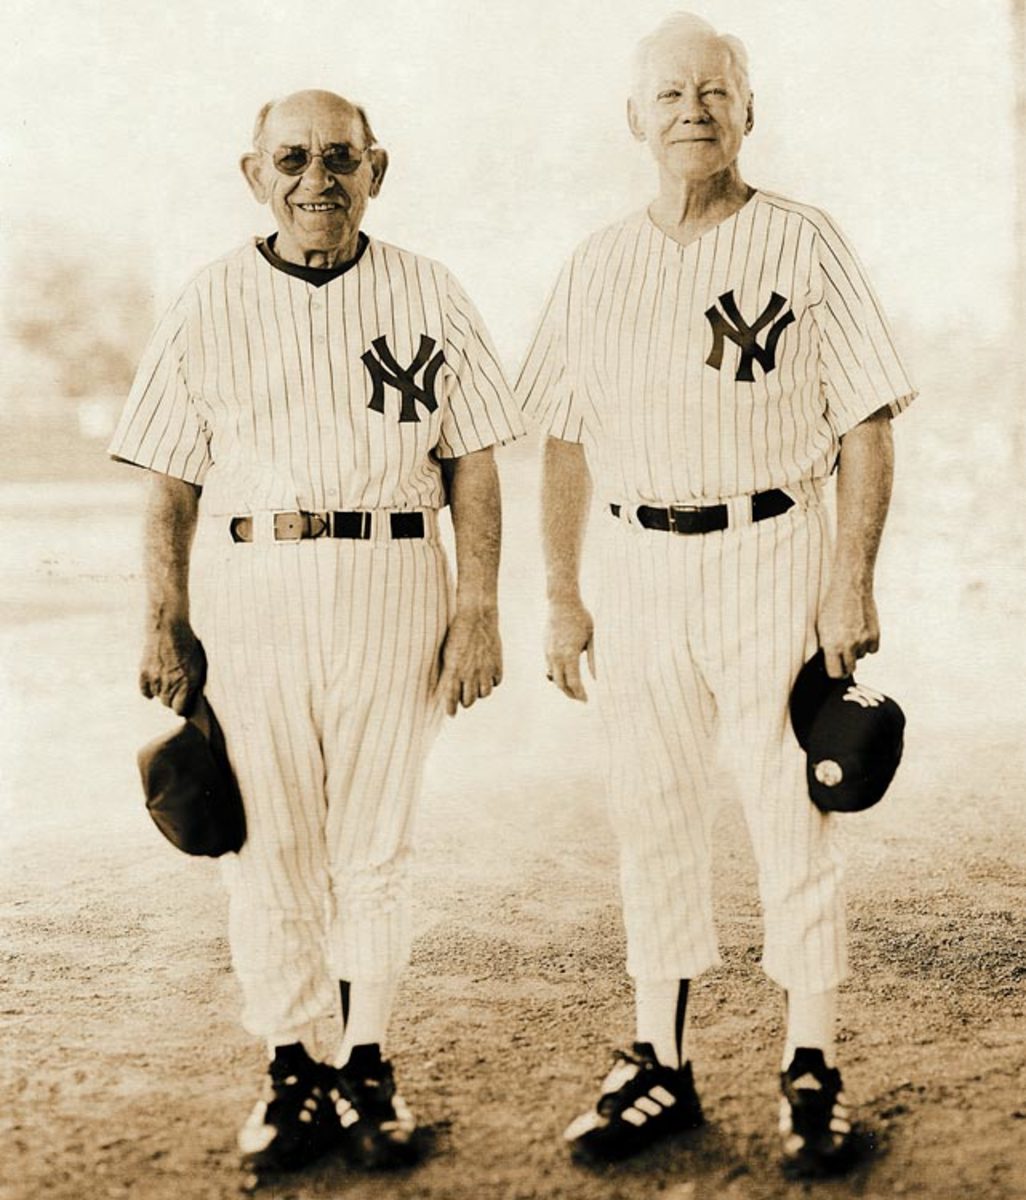 Yogi Berra and Whitey Ford